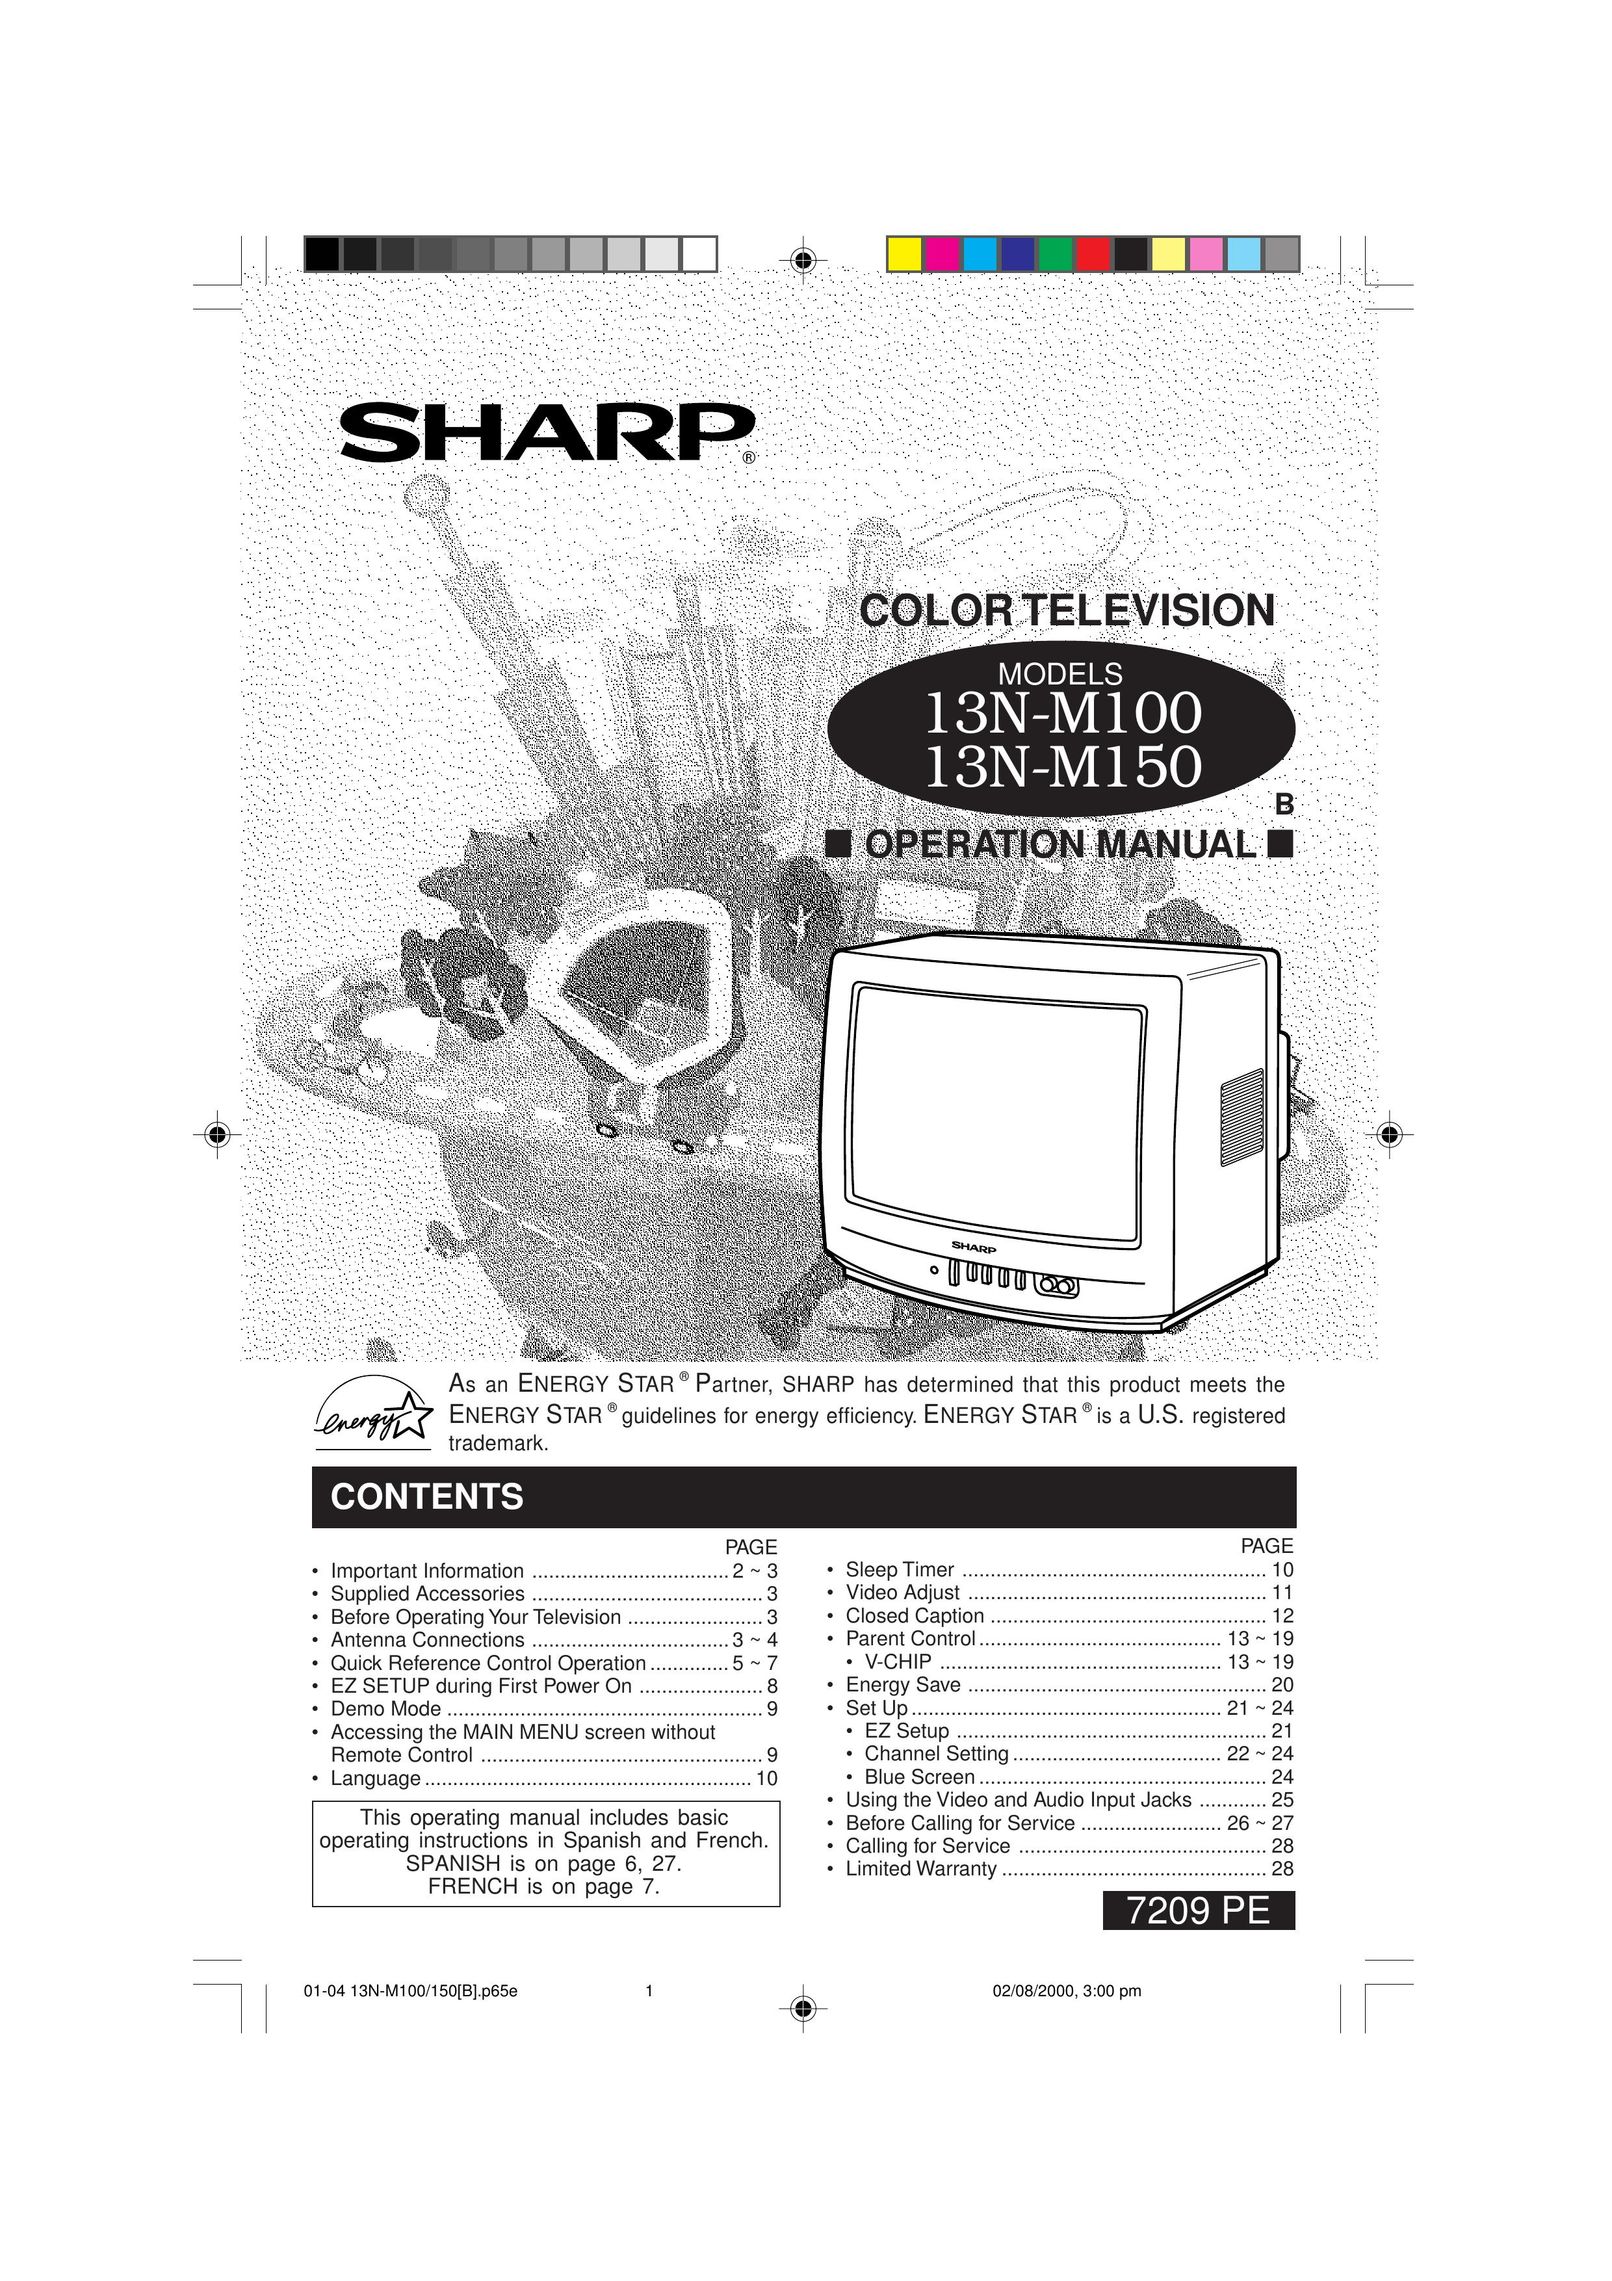 Sharp 13N-M150 CRT Television User Manual